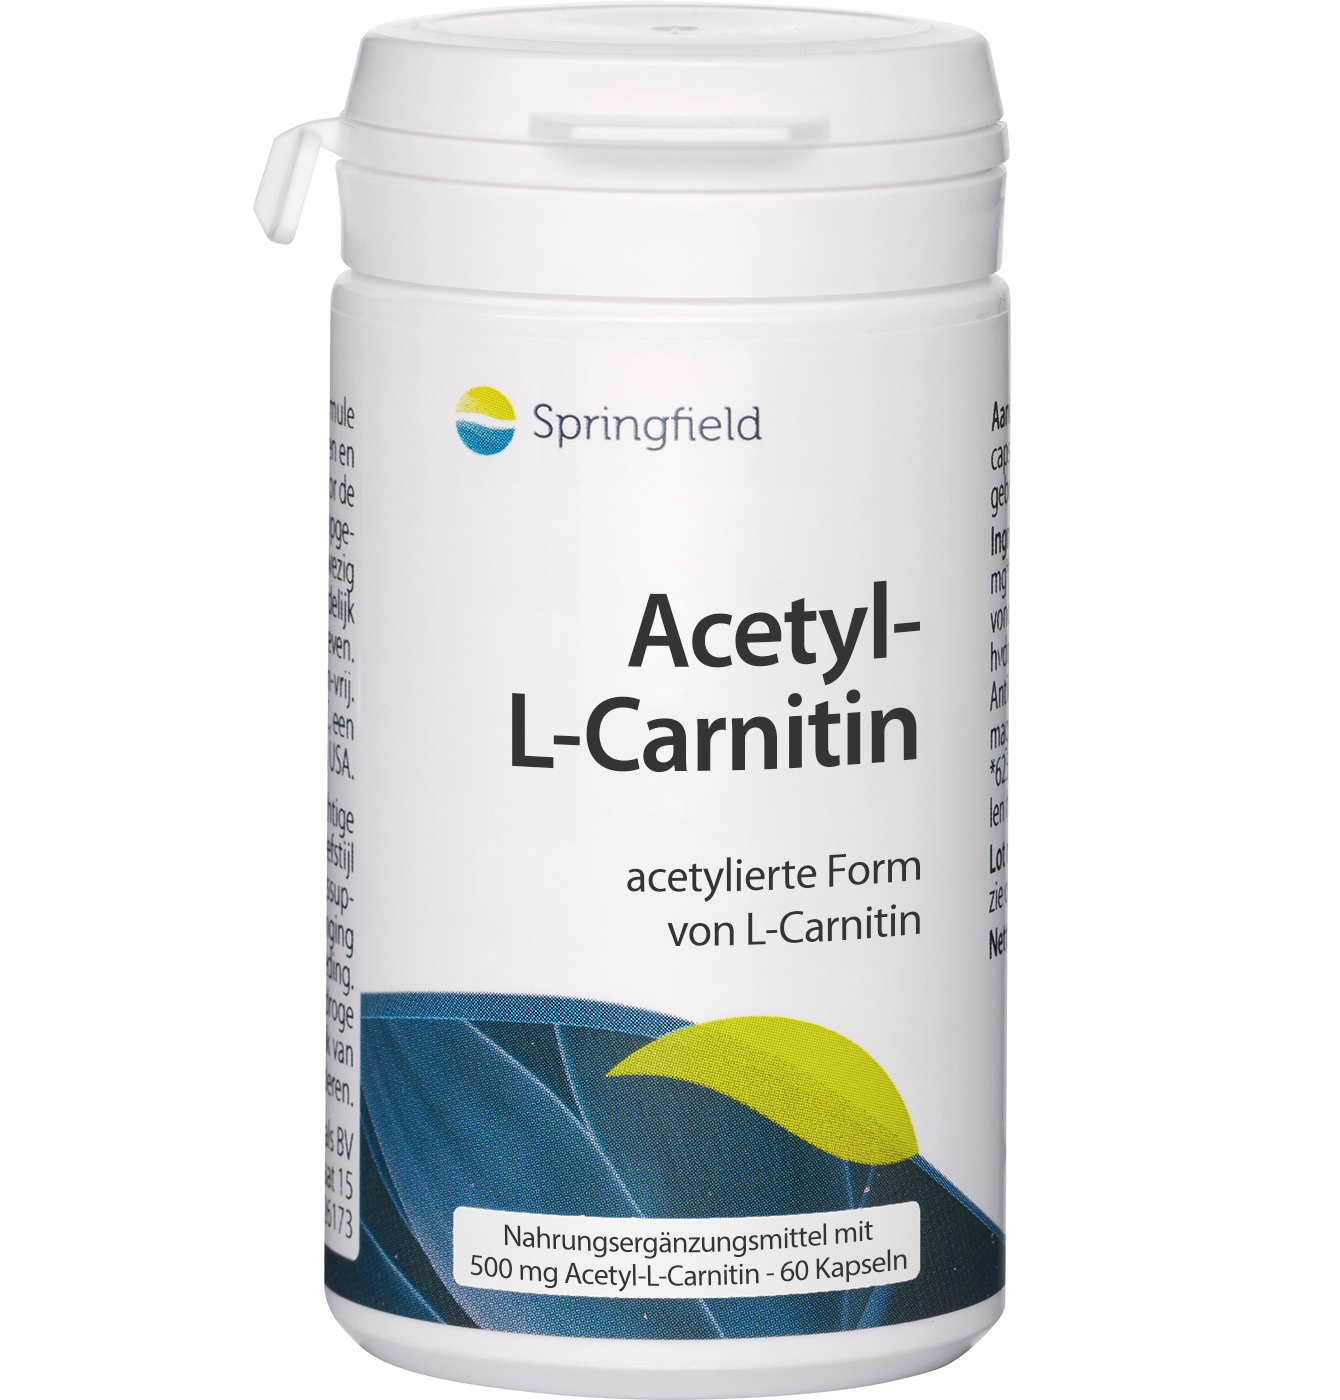 Acetyl-L-Carnitin 500mg von Springfield .